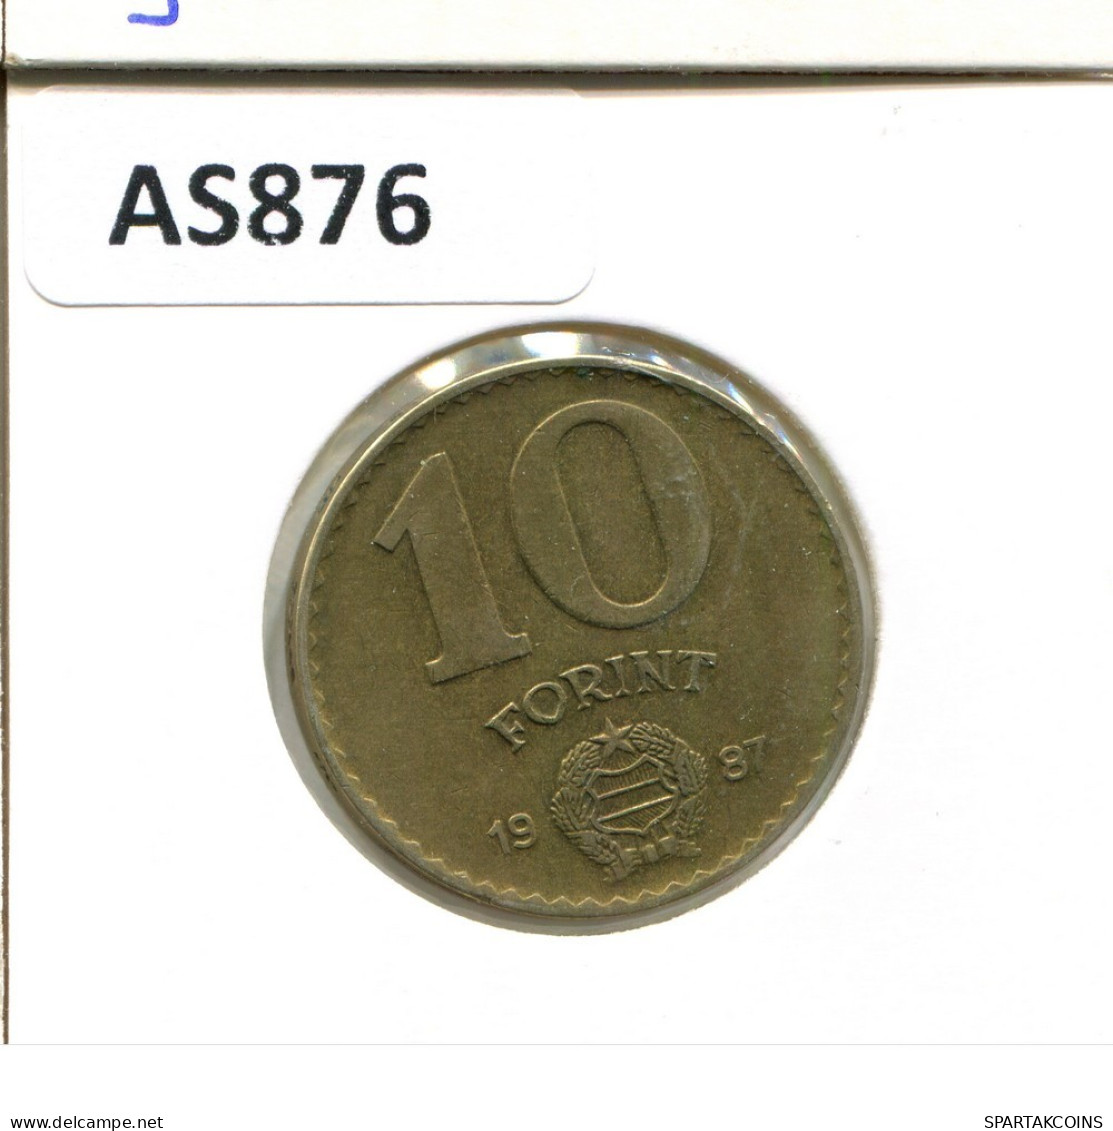 10 FORINT 1987 HUNGARY Coin #AS876.U.A - Hungary